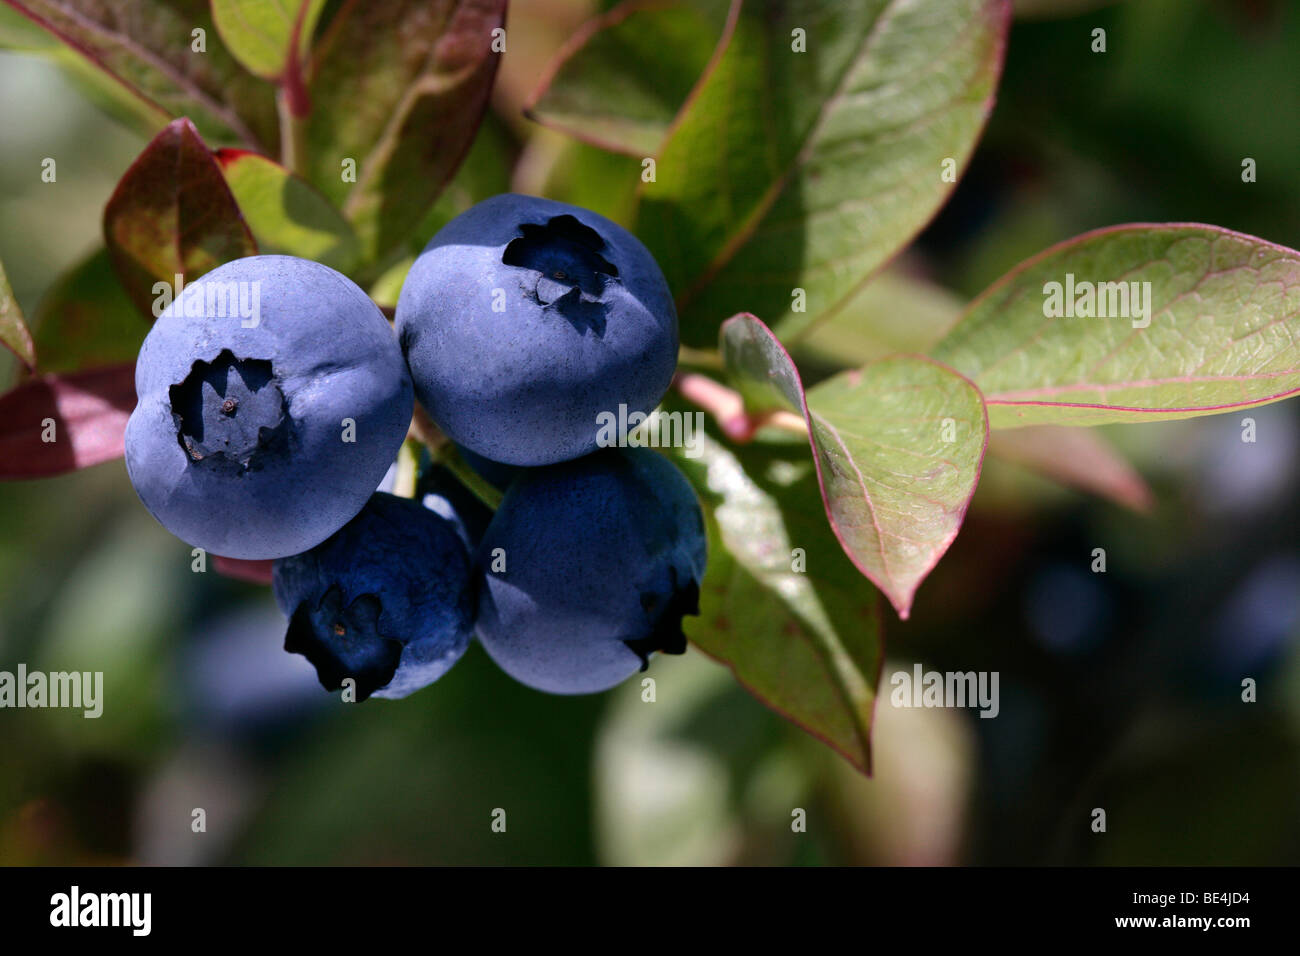 Bilberries (Vaccinium myrtillus) on the bush Stock Photo